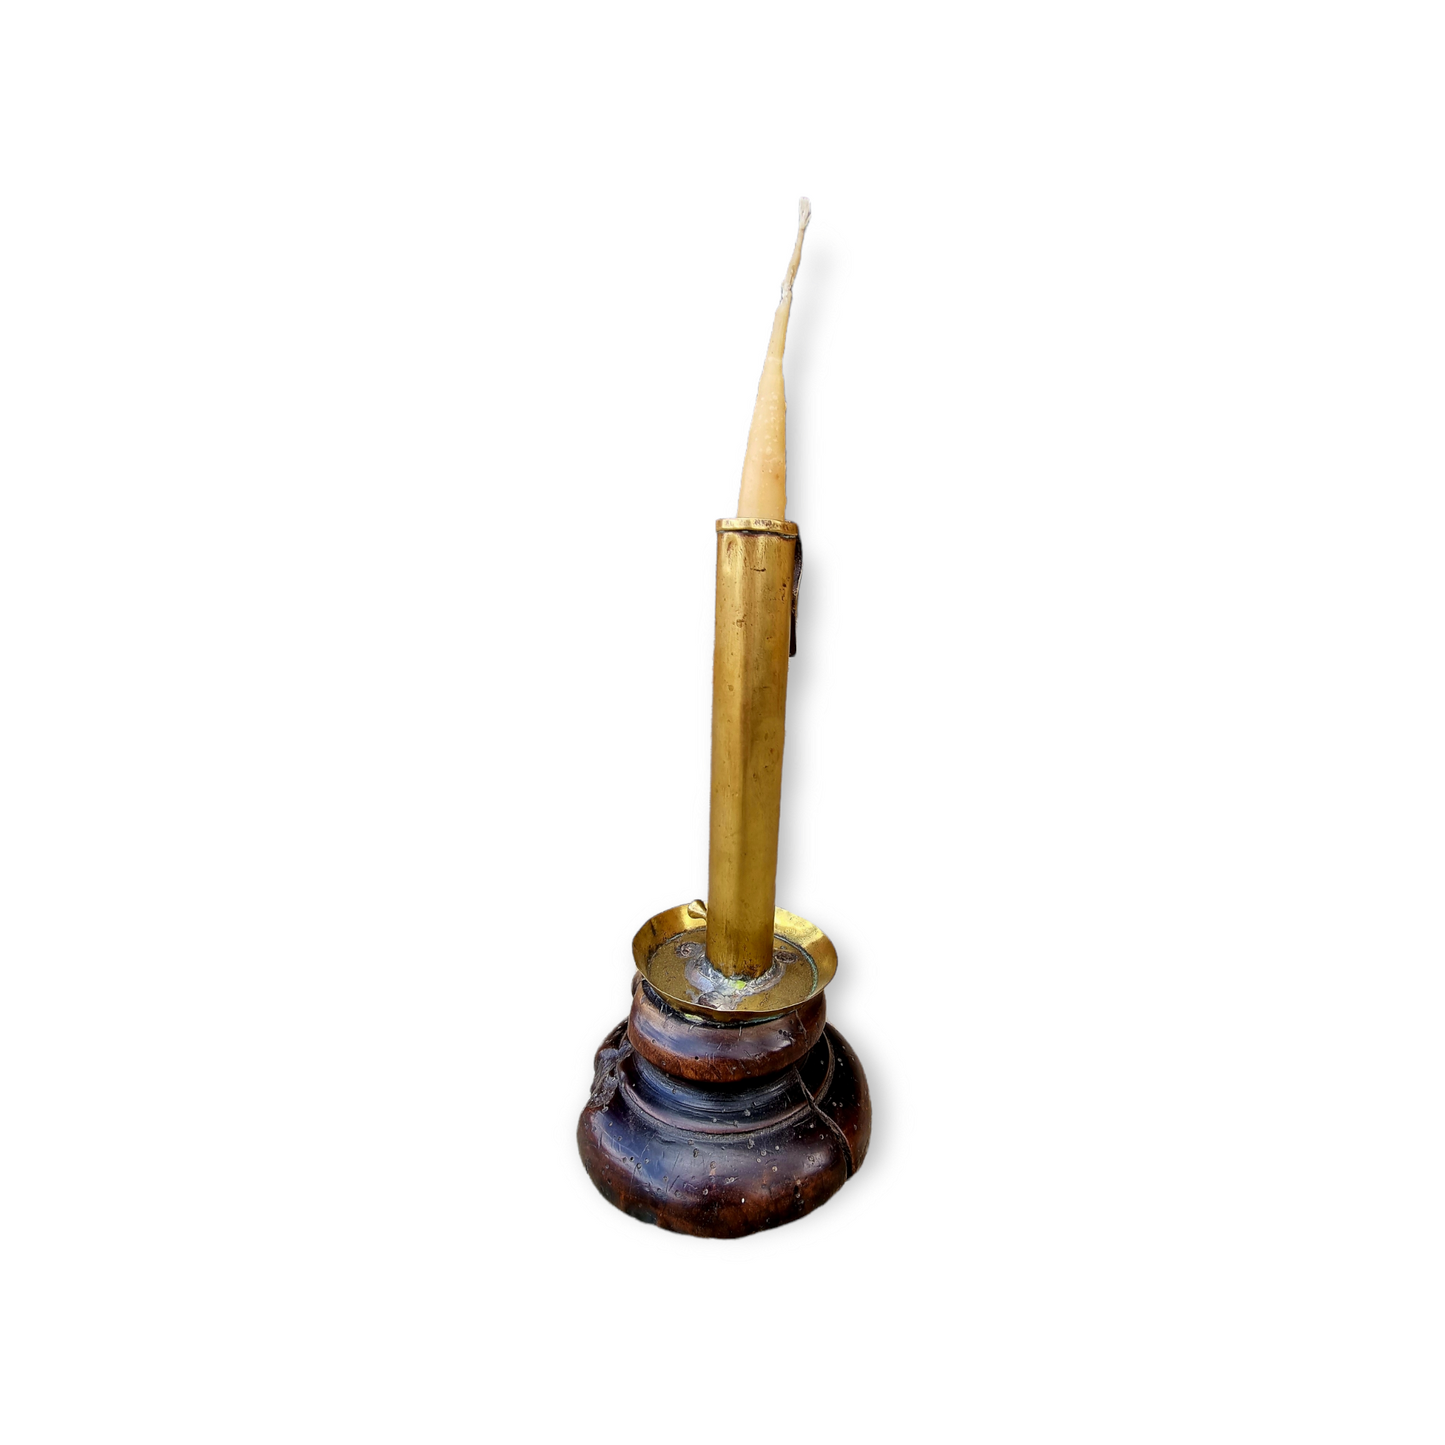 Late 18th Century Primitive English Antique Brass "Hog Scraper" Candlestick